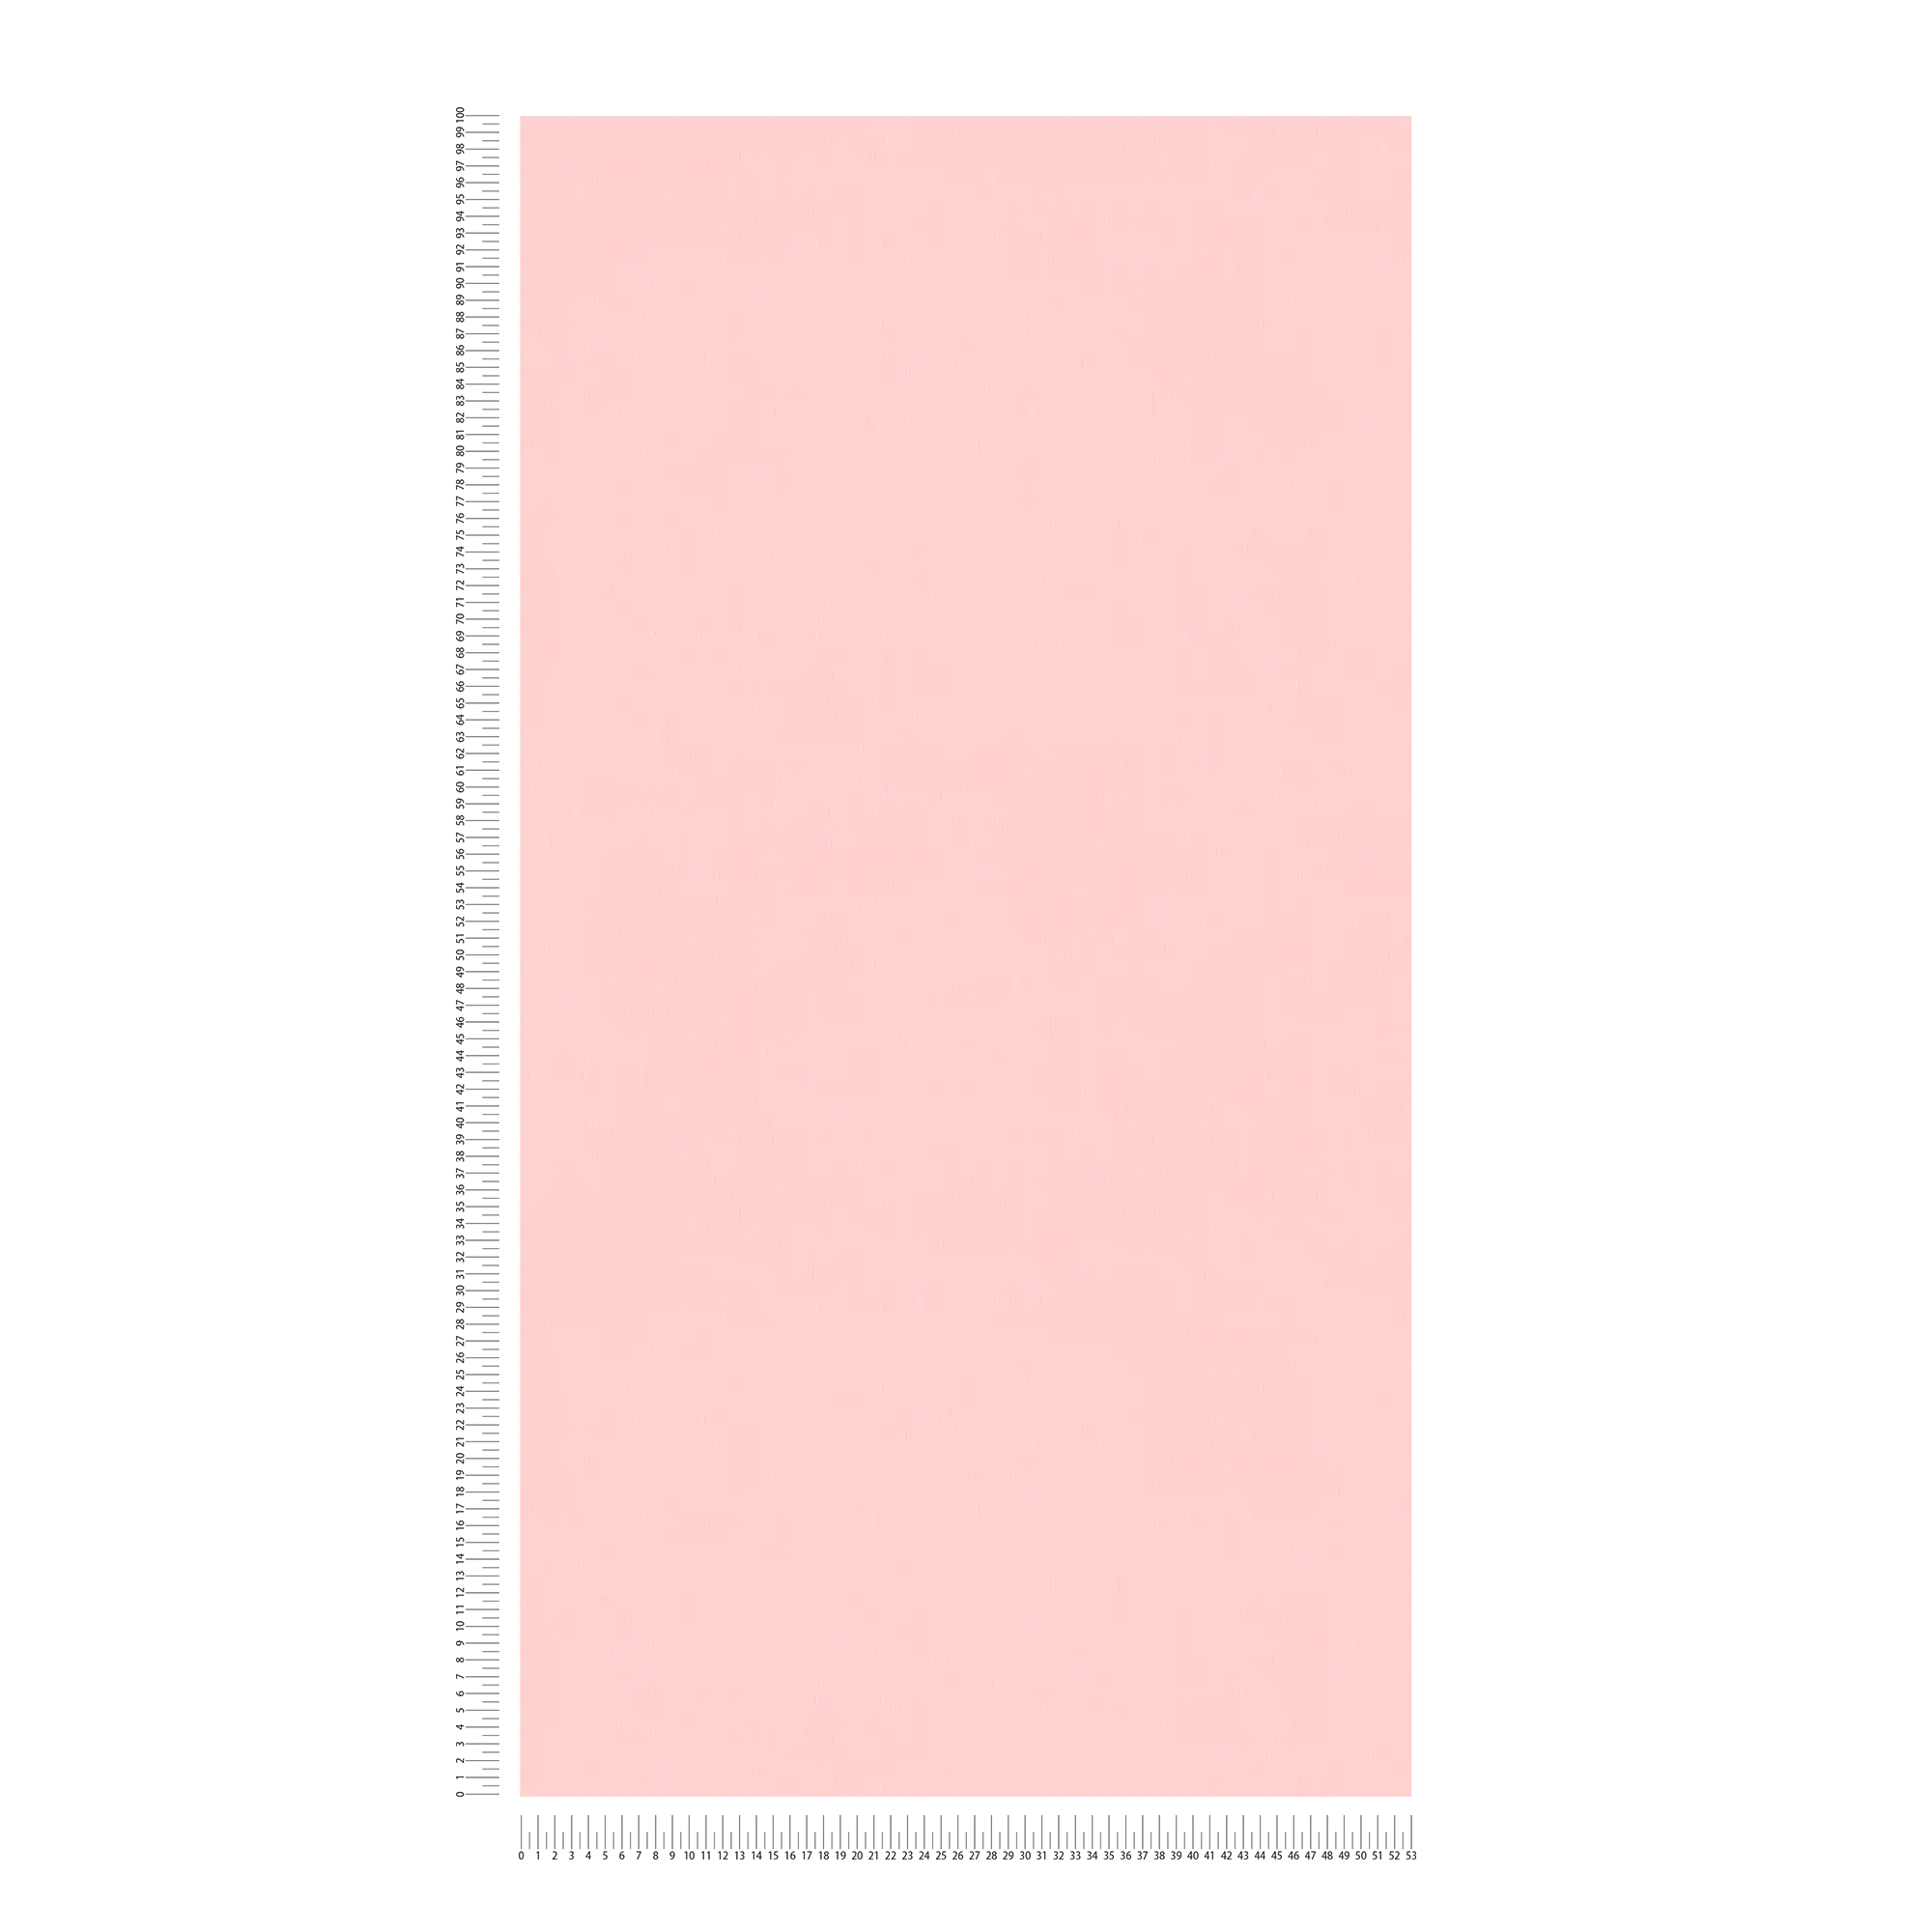             carta da parati cameretta ragazza uni - rosa
        